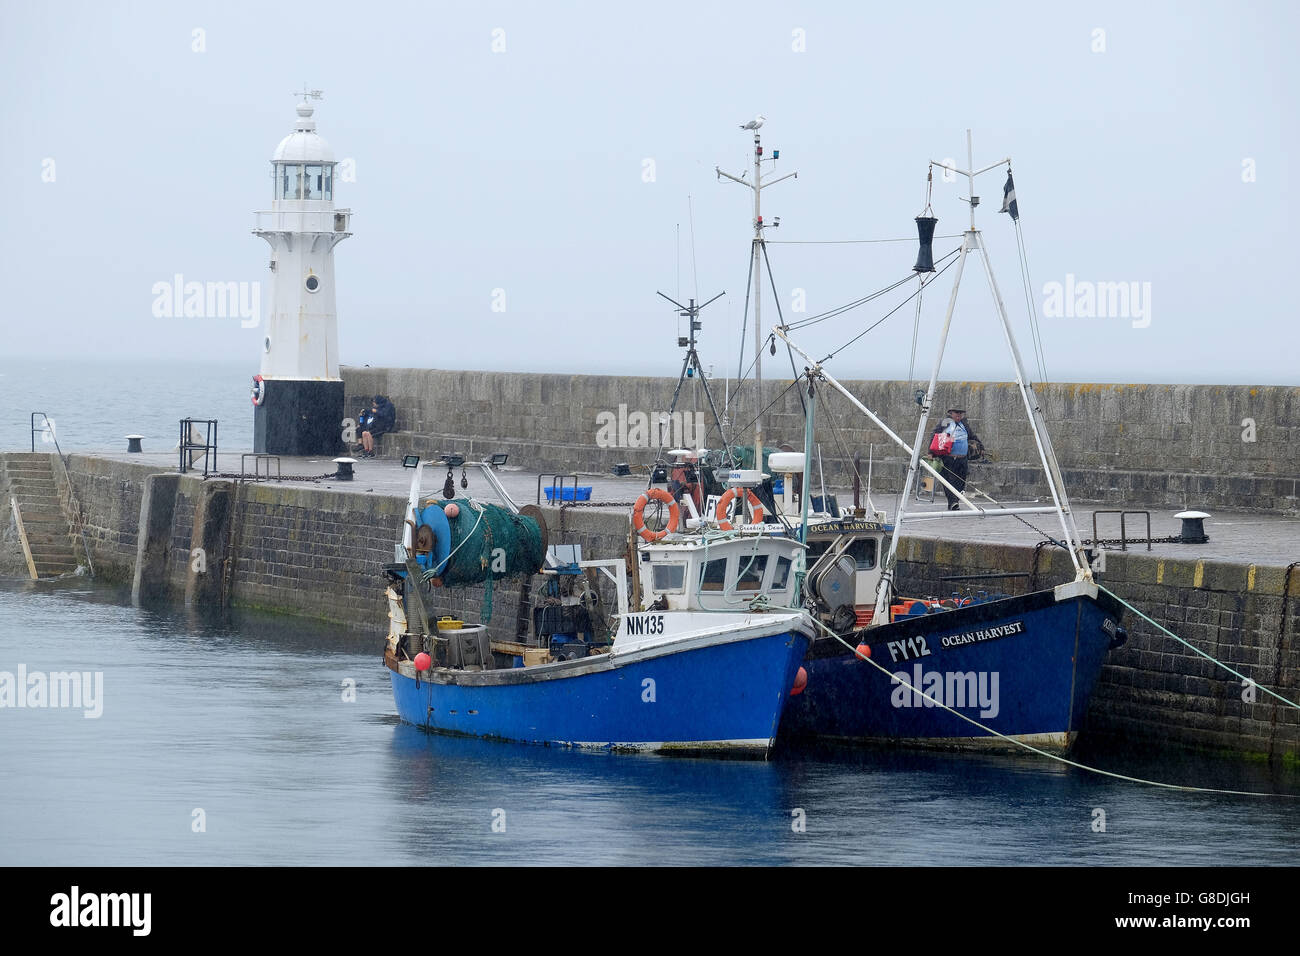 A Cornish fishing fleet in Mevagissey Cornwall England Stock Photo